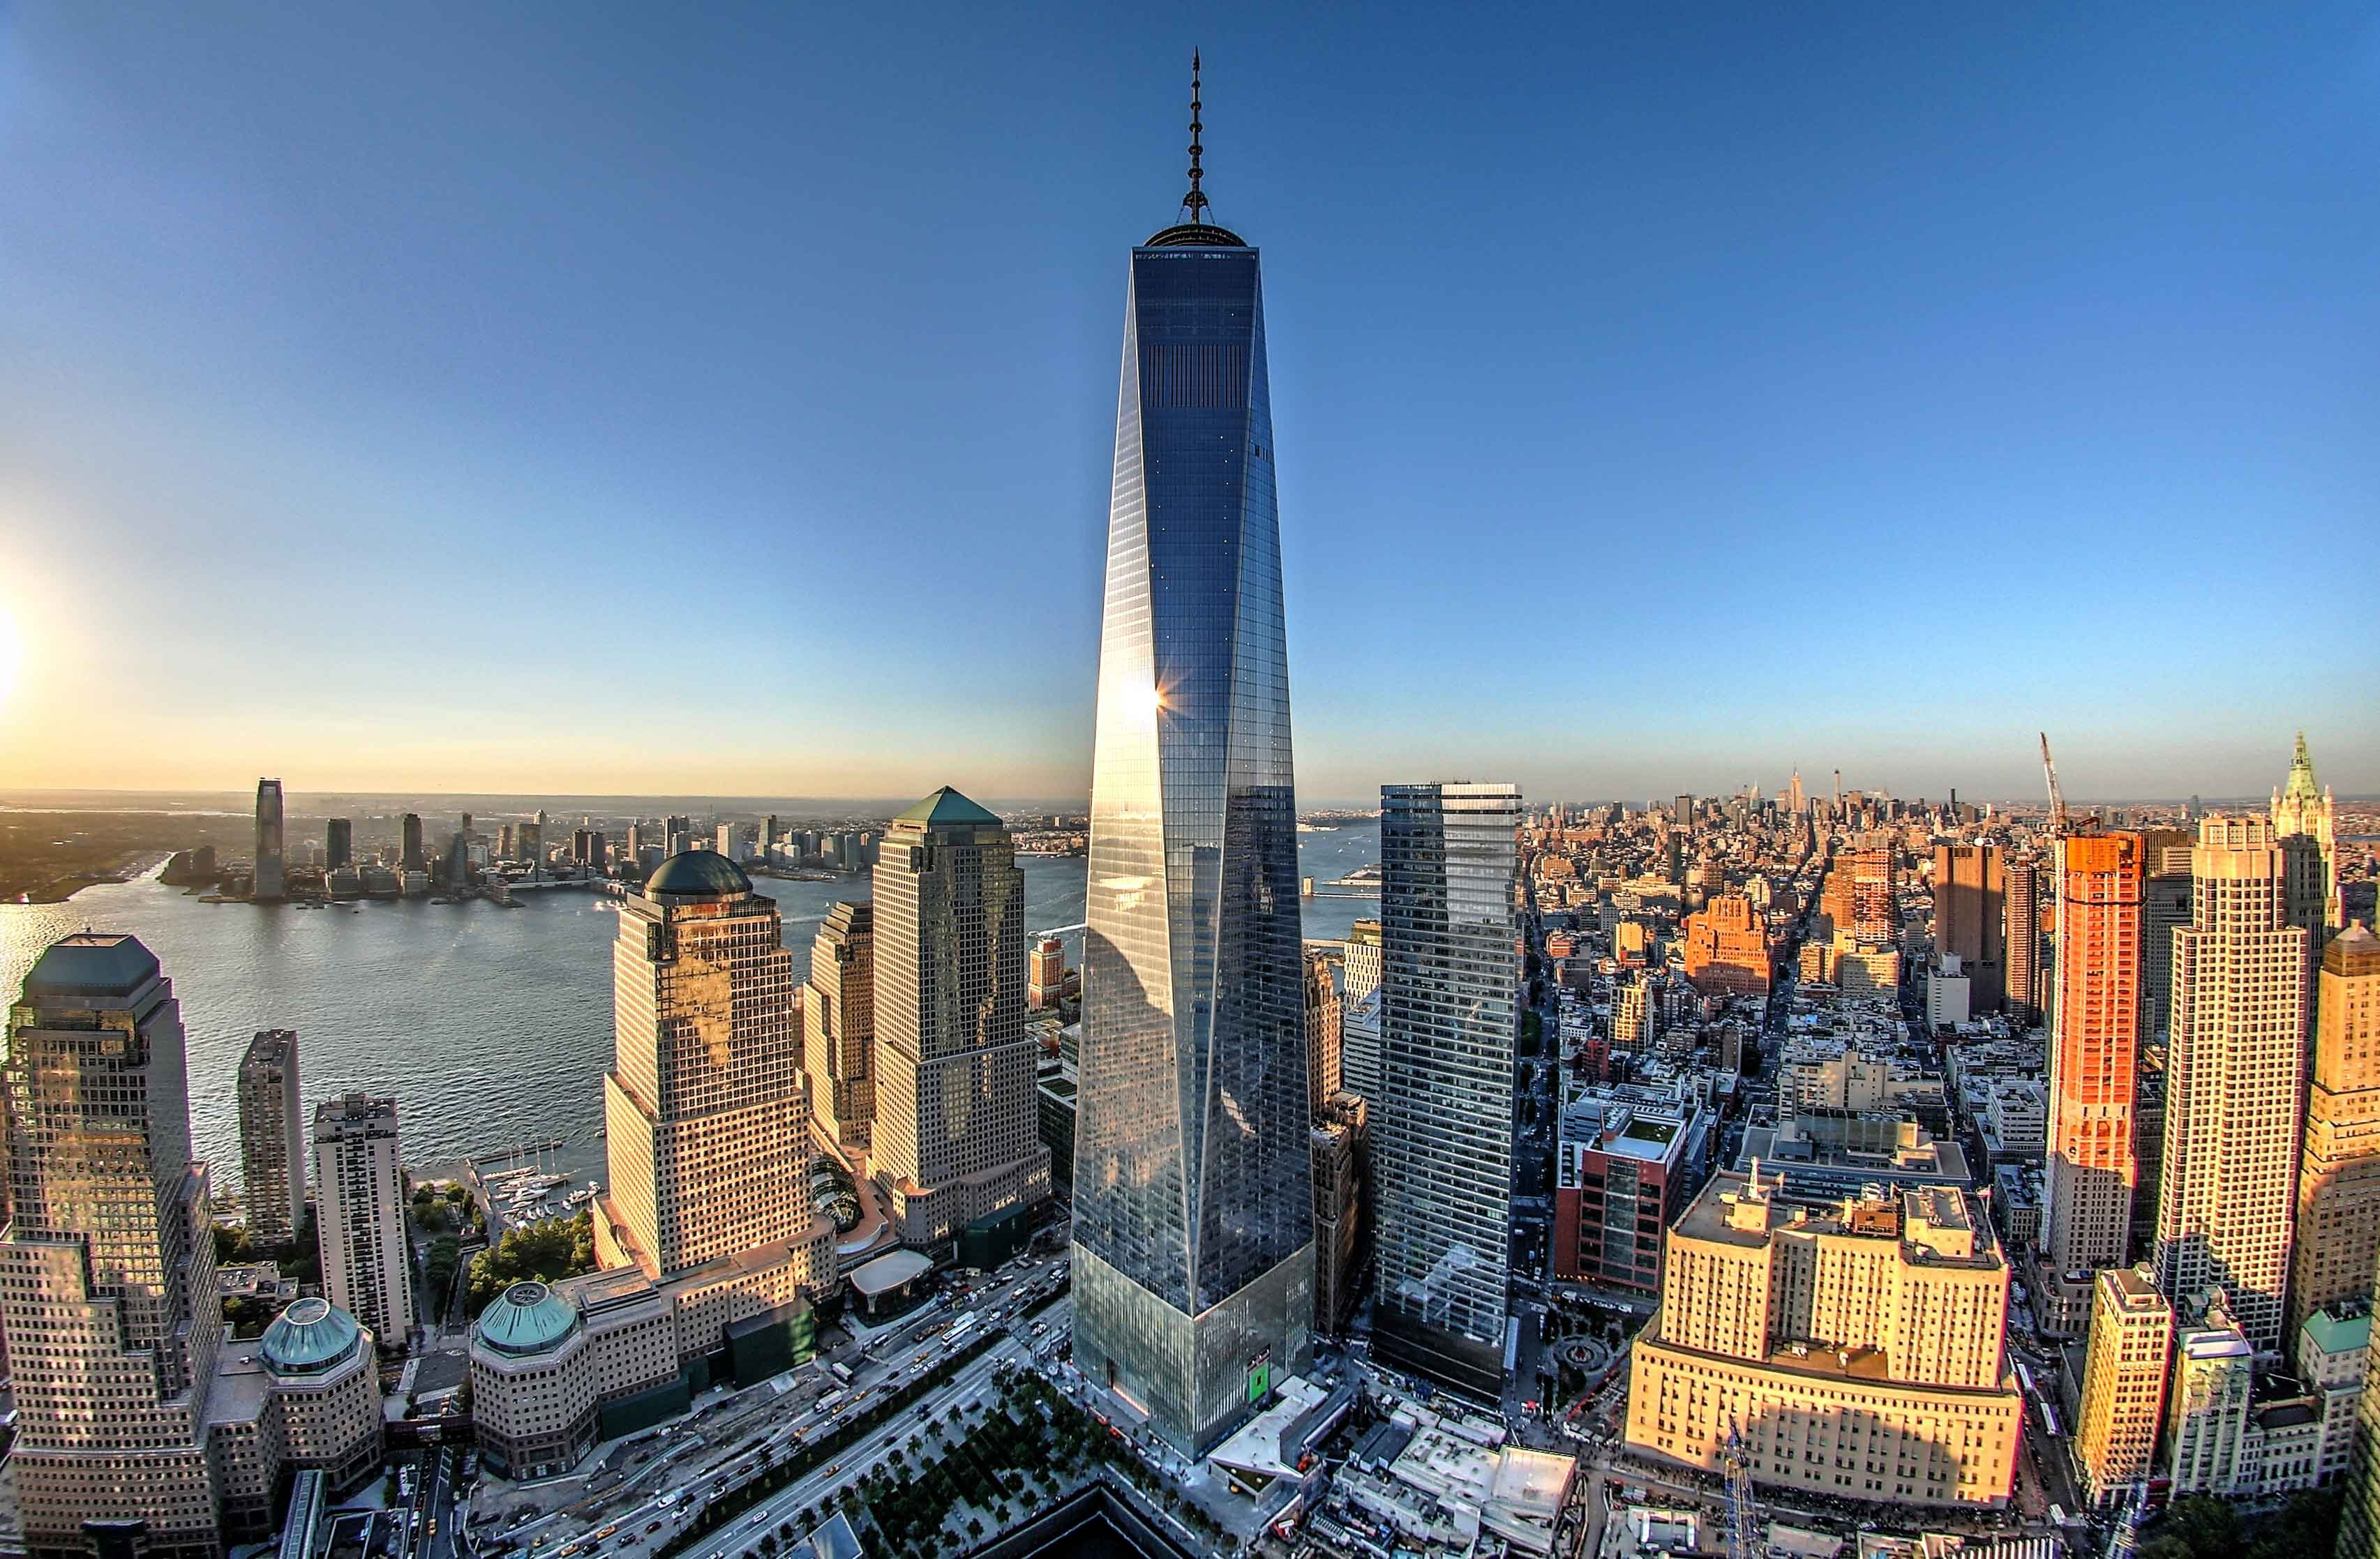 One world new york. Башни ВТЦ В Нью-Йорке. ВТЦ 1 башня свободы. One World trade Center, Нью-Йорк. Всемирный торговый центр 1 (541 м). Нью-Йорк, США.